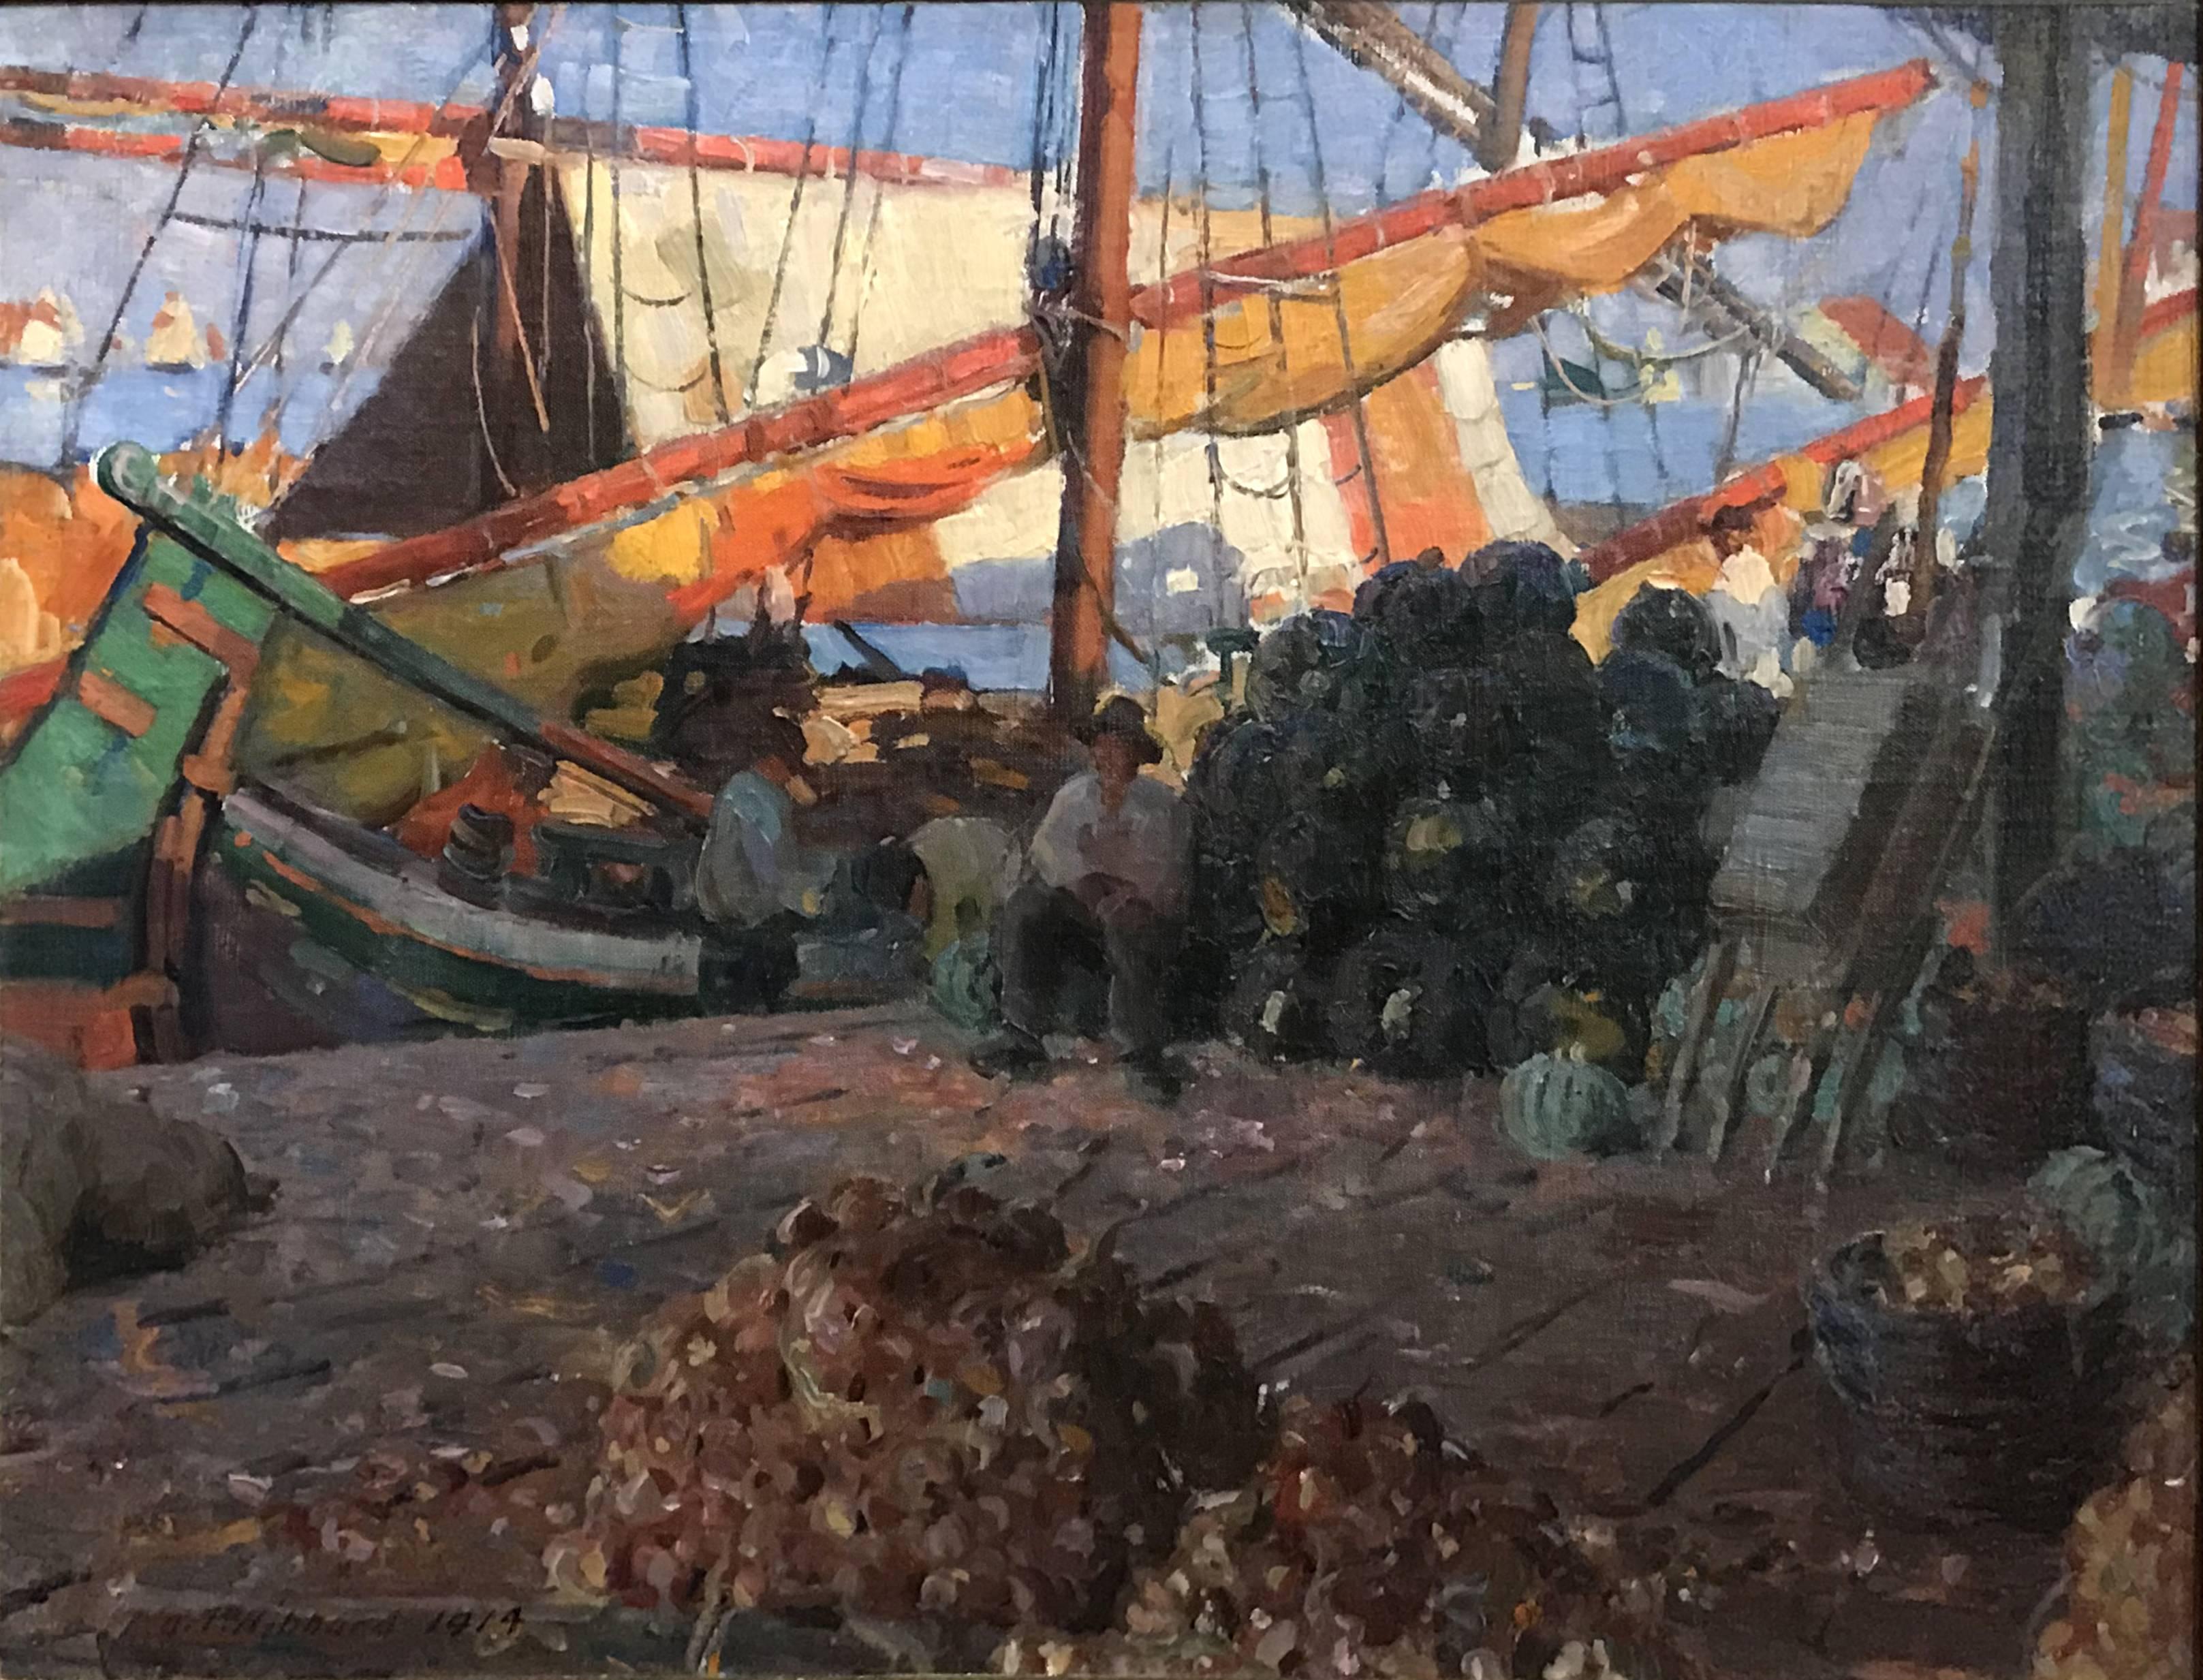 Harbor of Venice - Painting by Aldro Thompson Hibbard